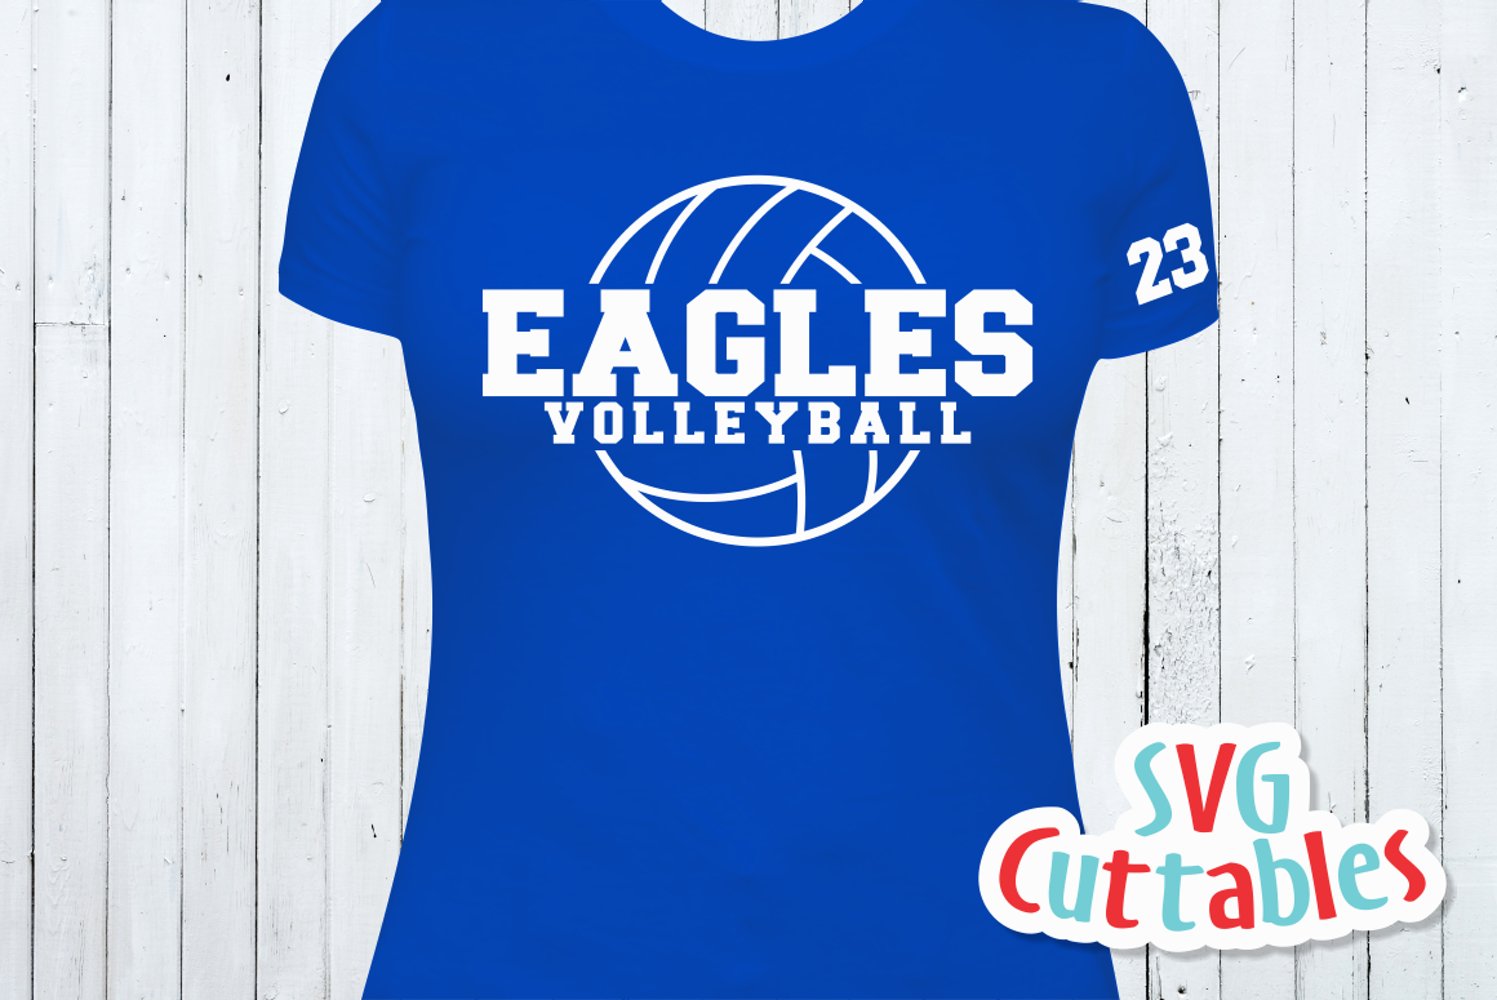 Blue t-shirt design for volleyball team.